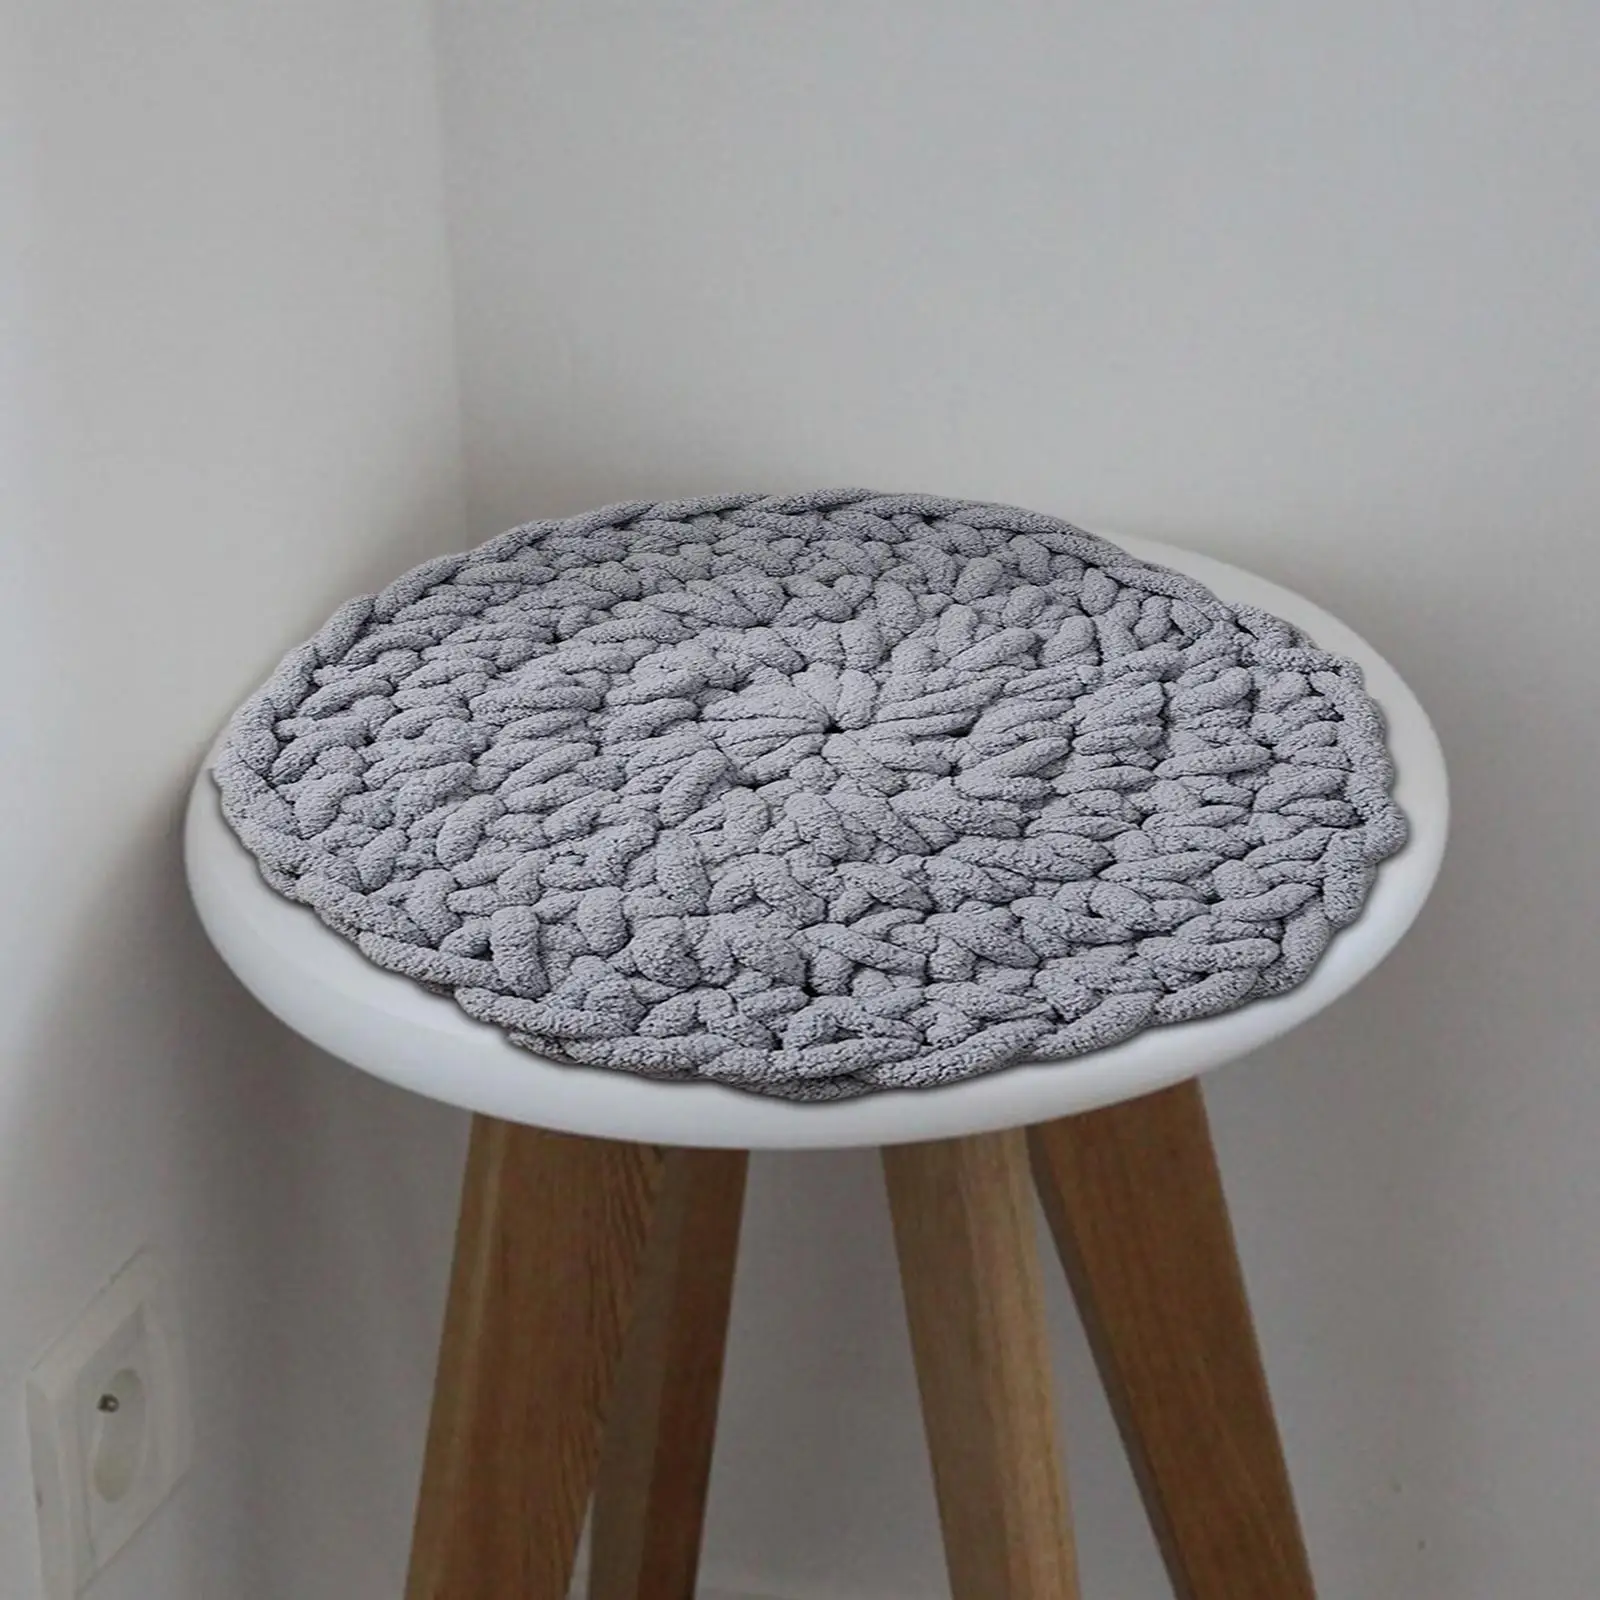 Knitted Meditation Cushion Floor Cushion Decorative Versatile Reading Cushion 50x50cm Sitting Mat for Garden Office Lightweight